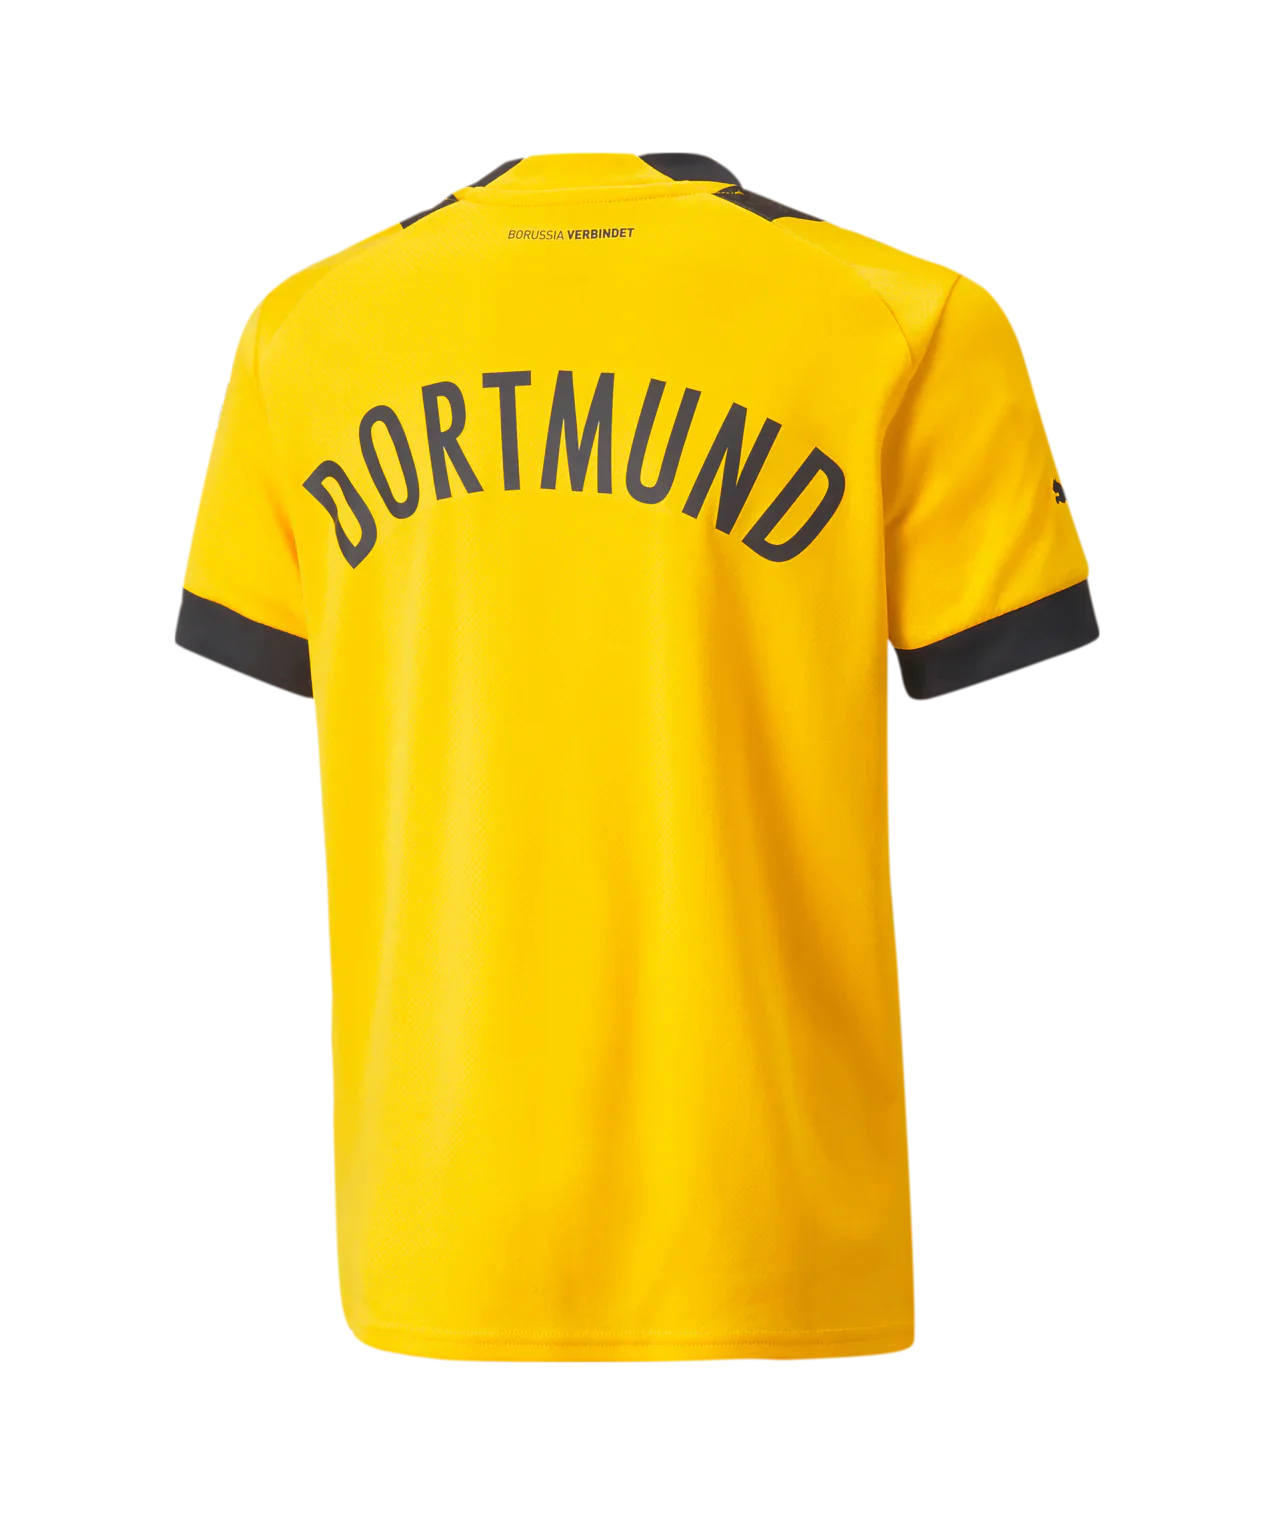 Puma Kid's Borussia Dortmund Home Jersey 22 Youth Yellow/Black